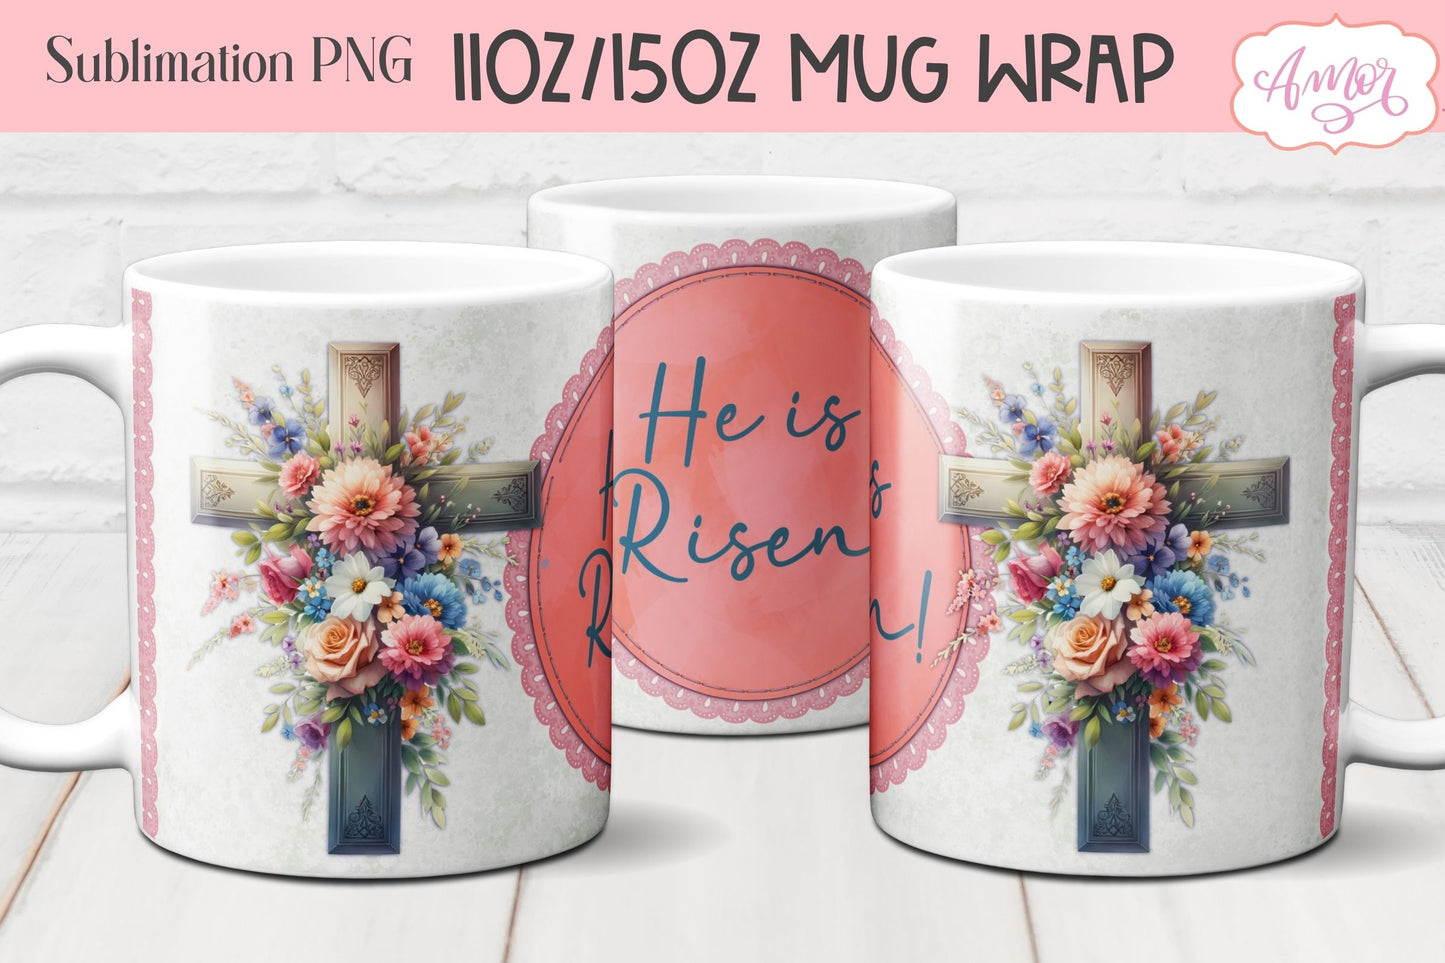 Christian Easter mug Wrap for sublimation for 11oz and 15oz